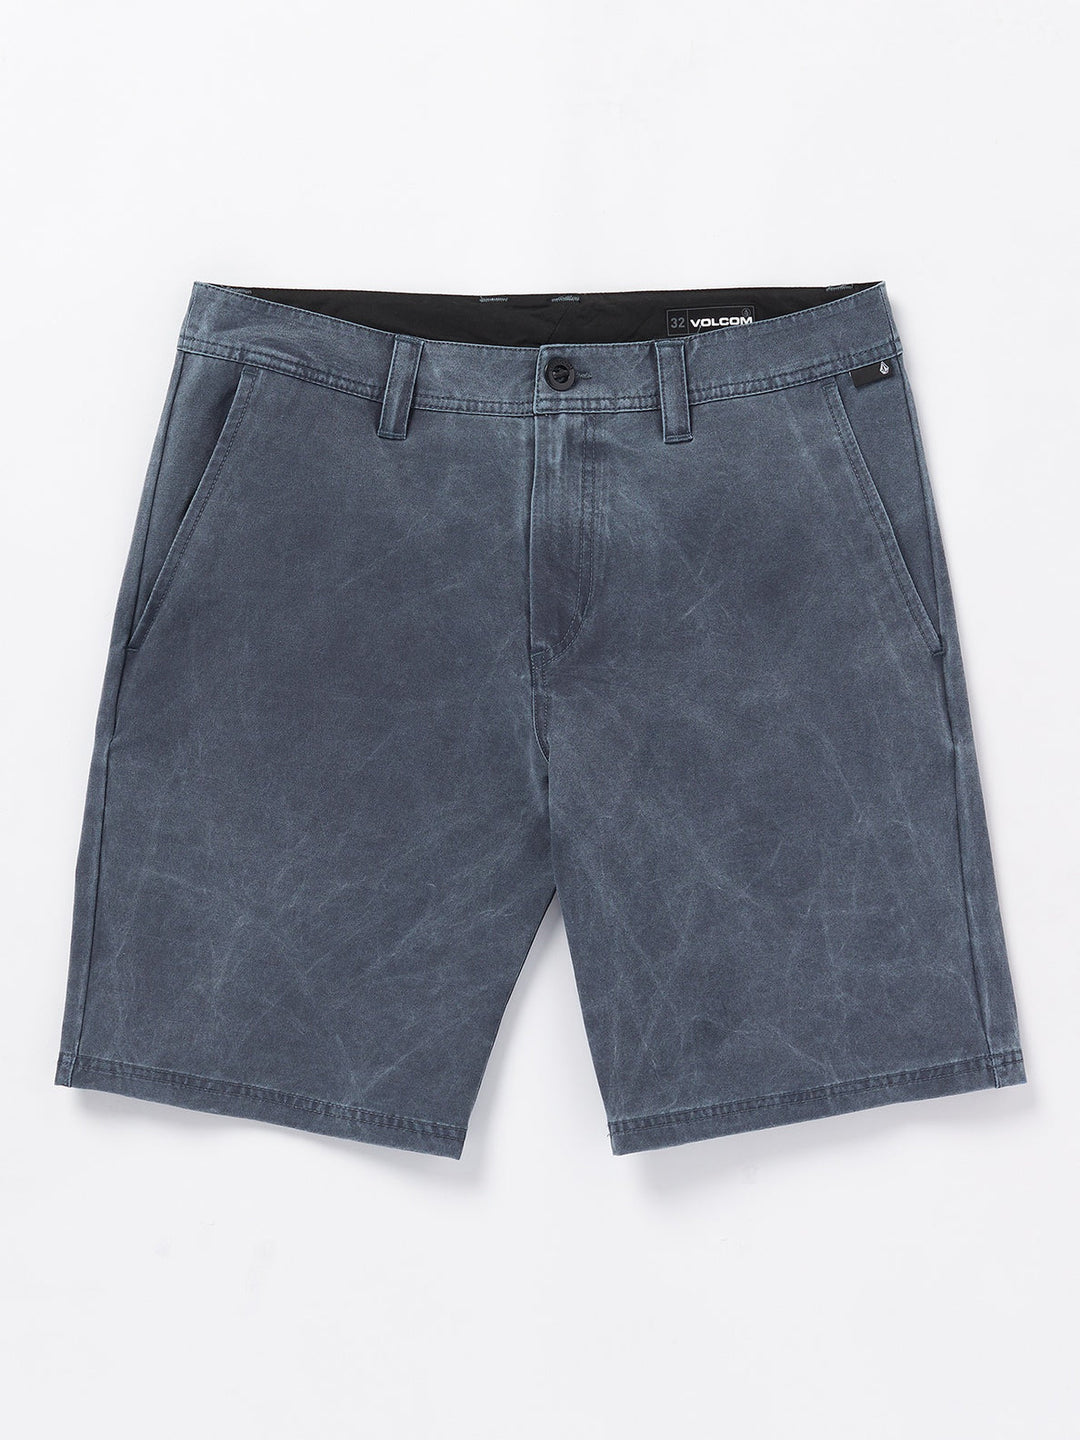 Volcom Stone Faded Hybrid Shorts - Navy - Sun Diego Boardshop